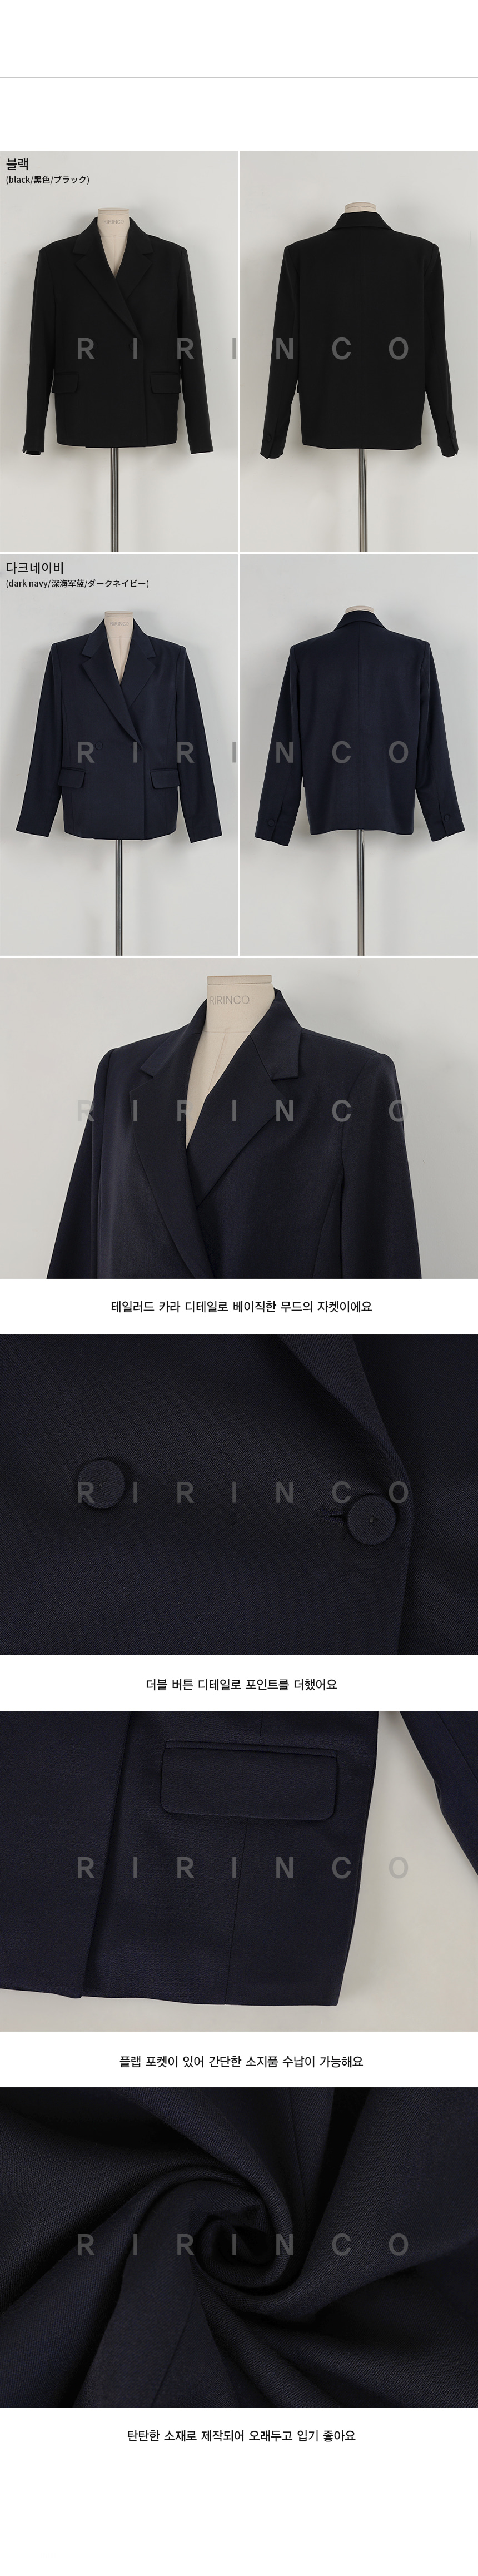 RIRINCO  ダブルボタンポケットテーラードカラーツーピースジャケット